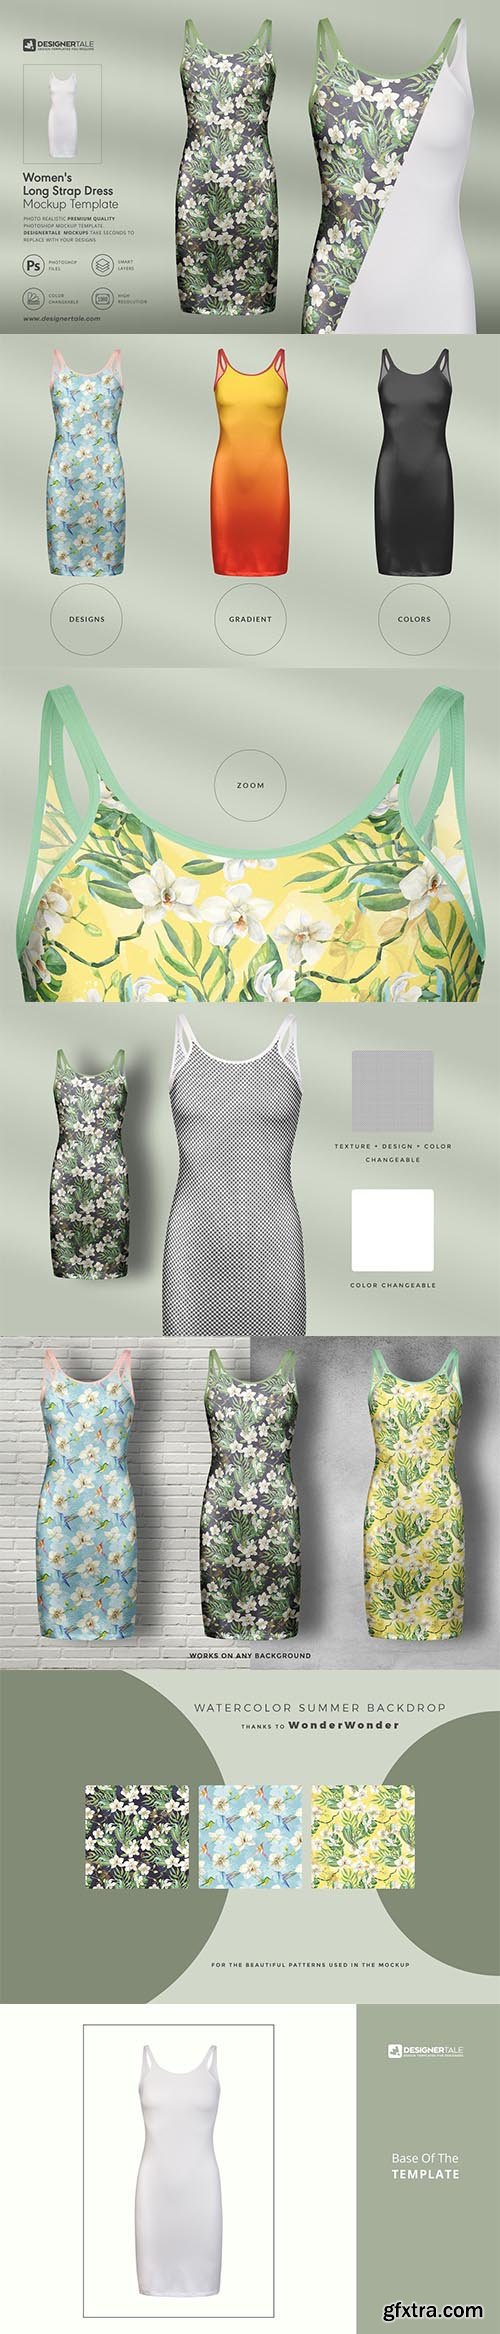 CreativeMarket - Women\'s Long Strap Dress Mockup 4109441